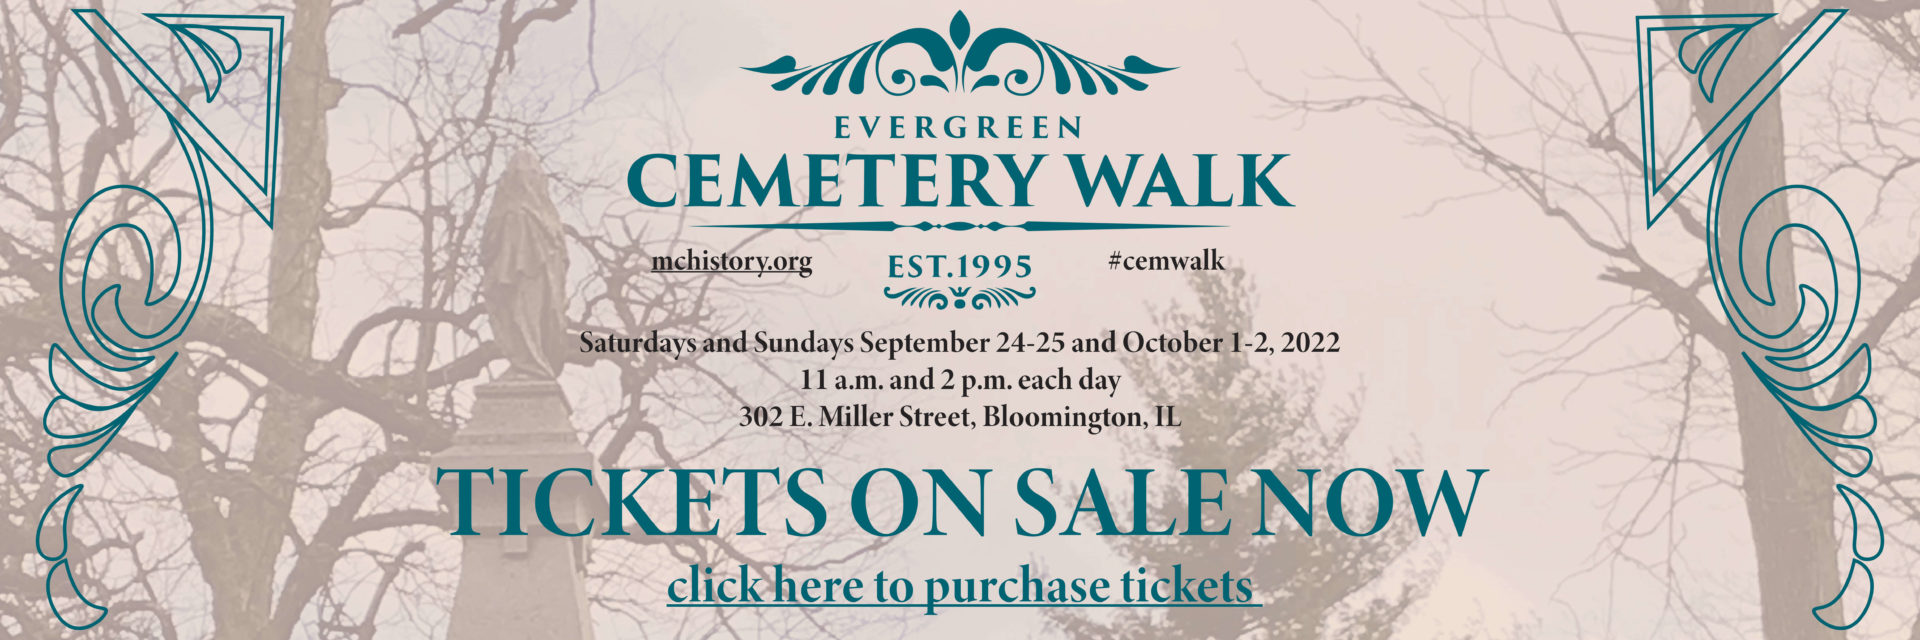 2022 Evergreen Cemetery Walk